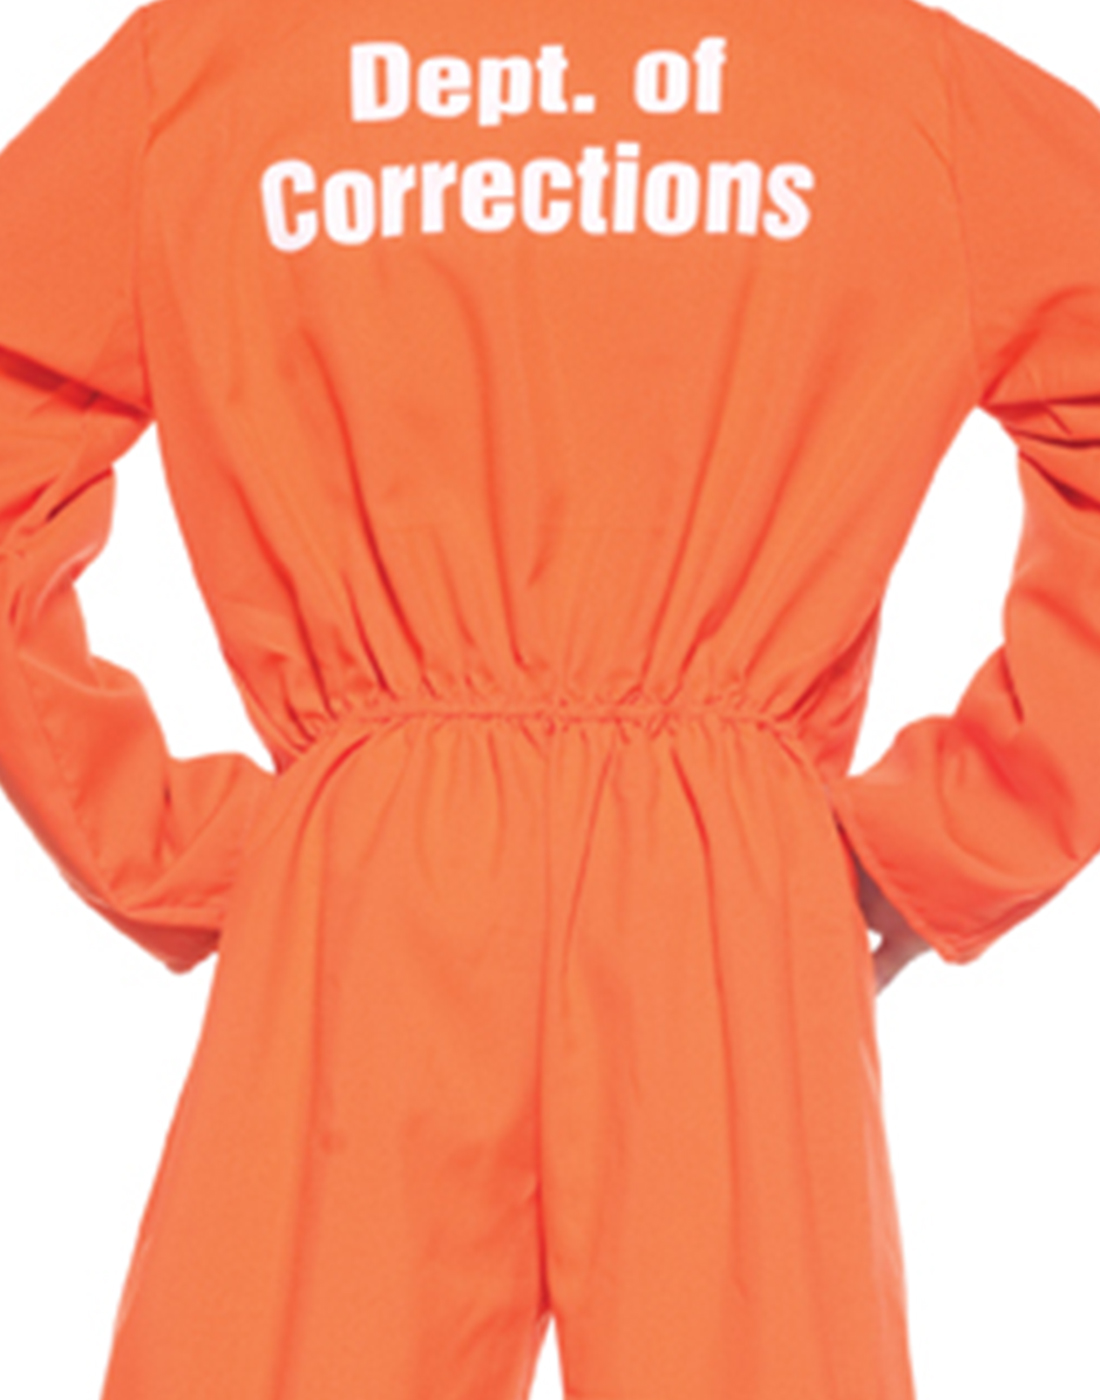 Underwraps Adult Orange Jumpsuit Costume - One Size - image 3 of 4